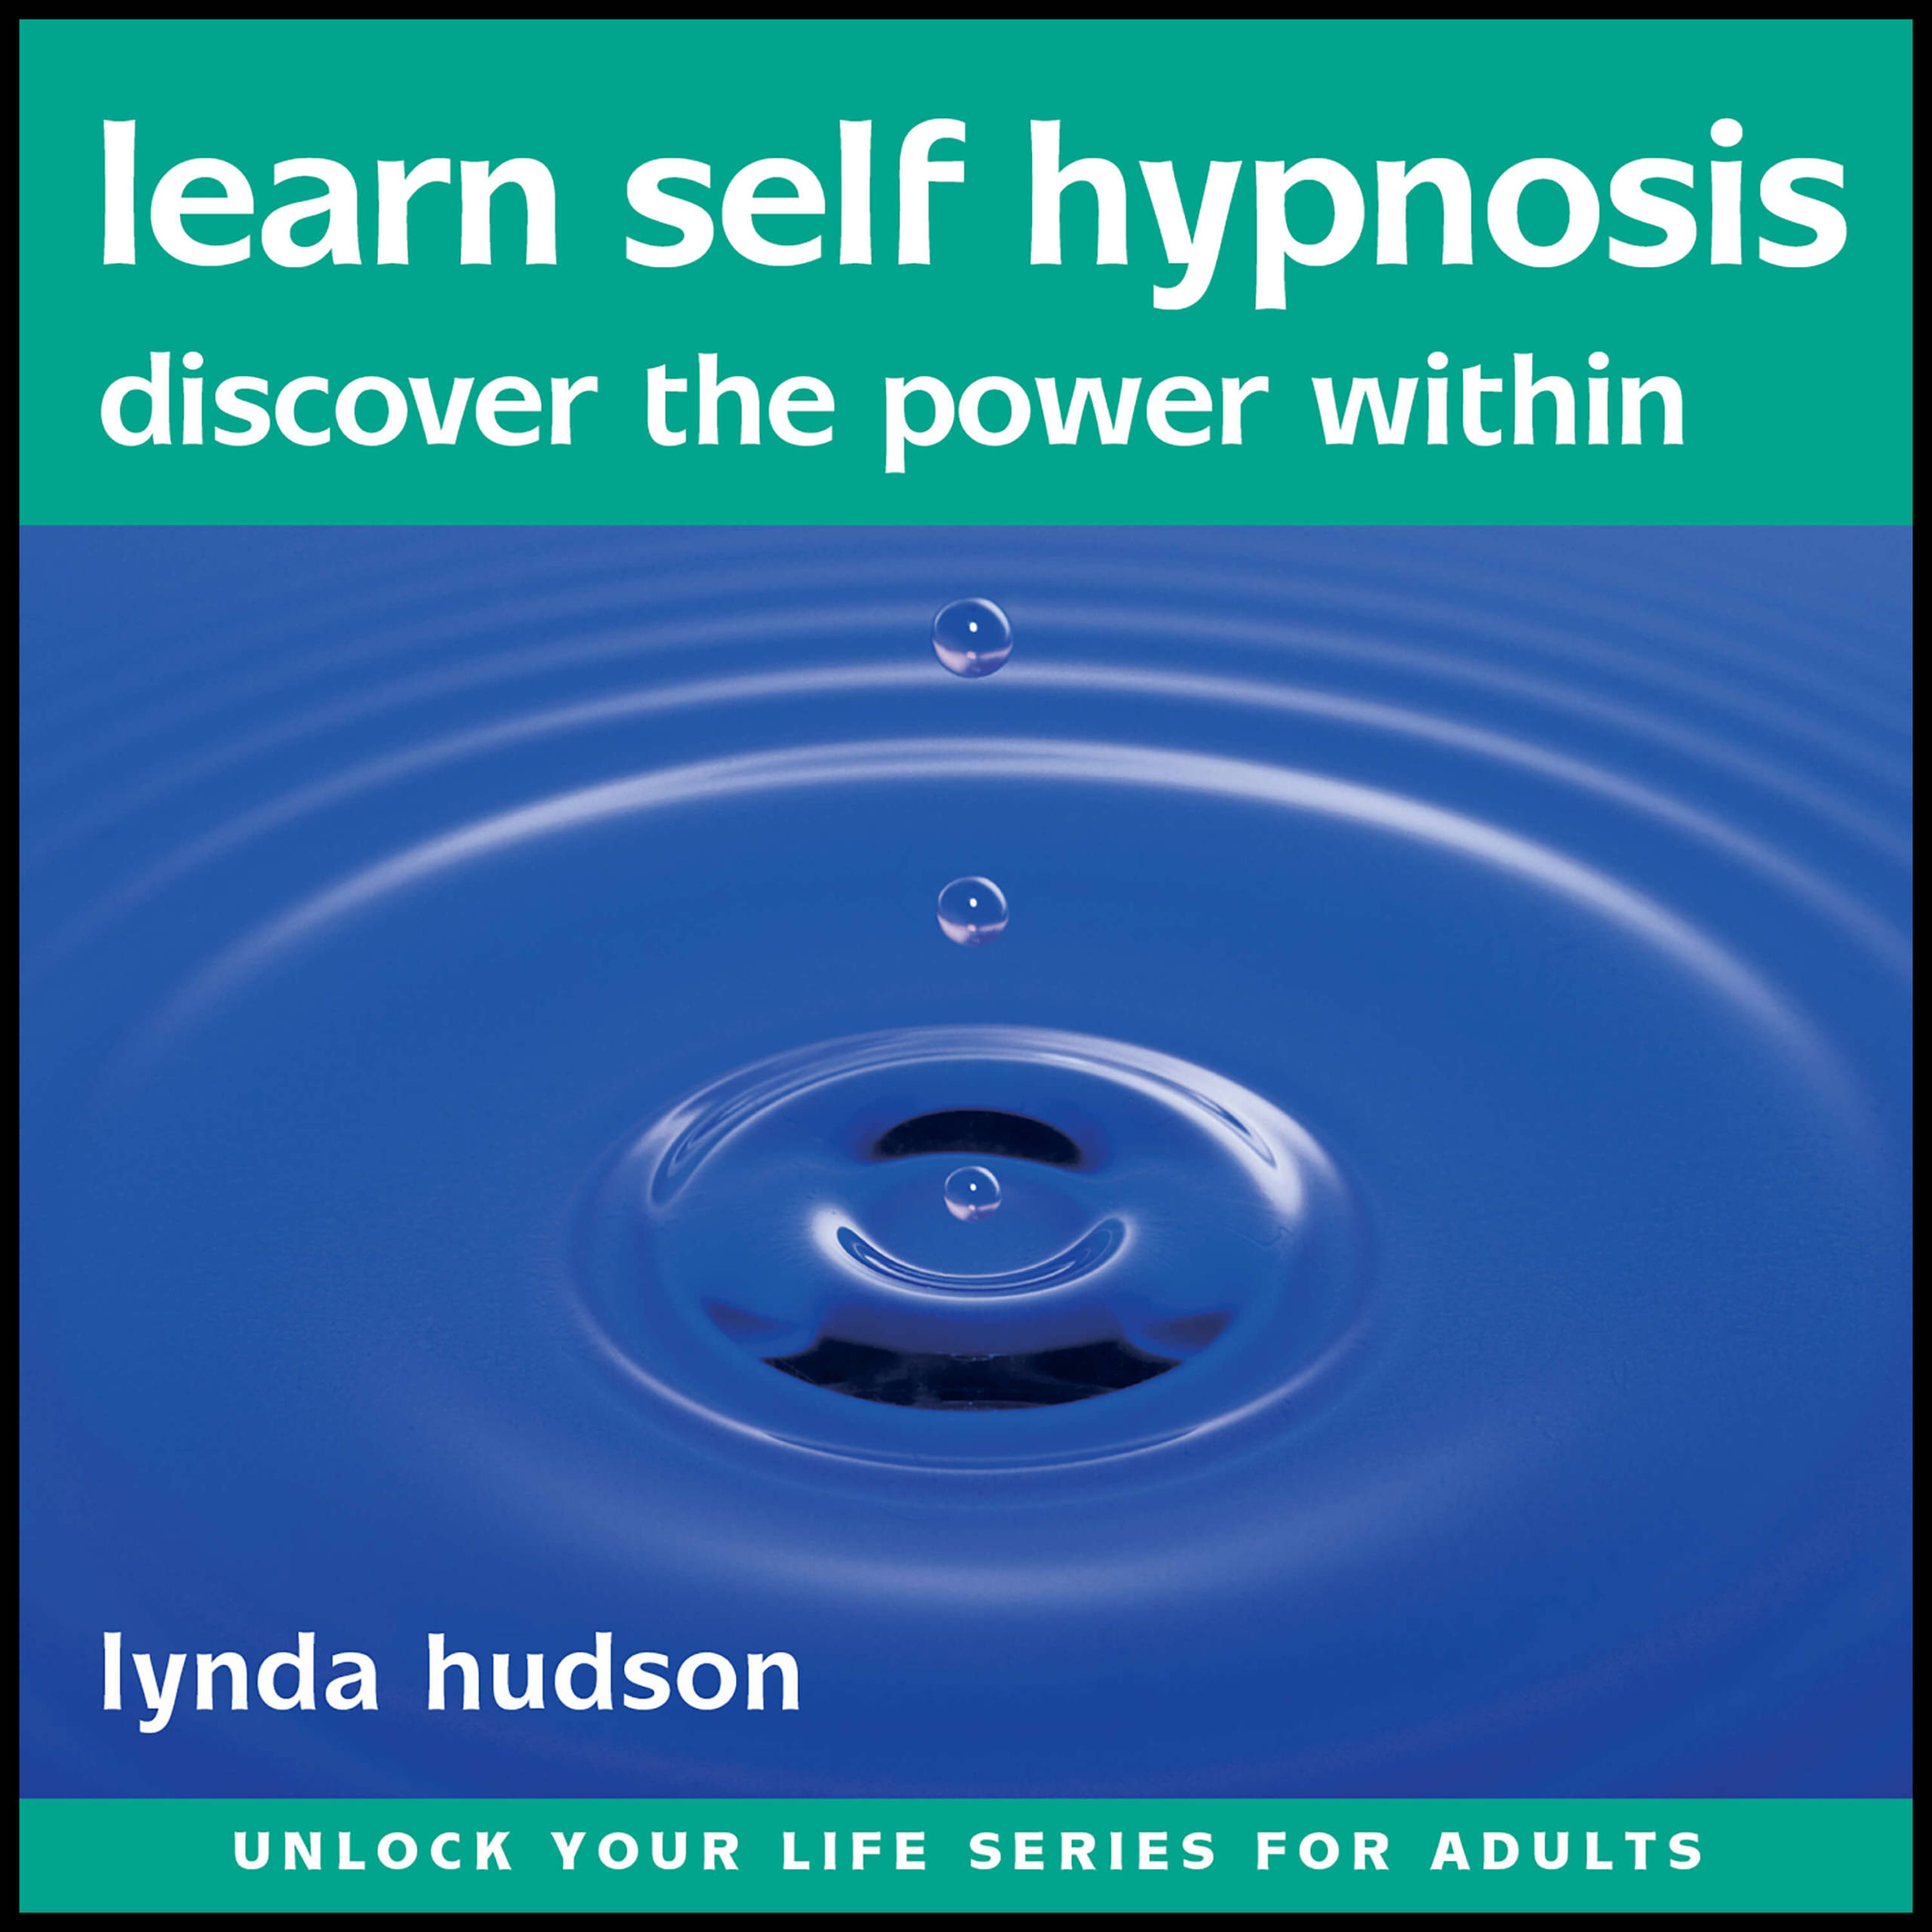 Learn self hypnosis